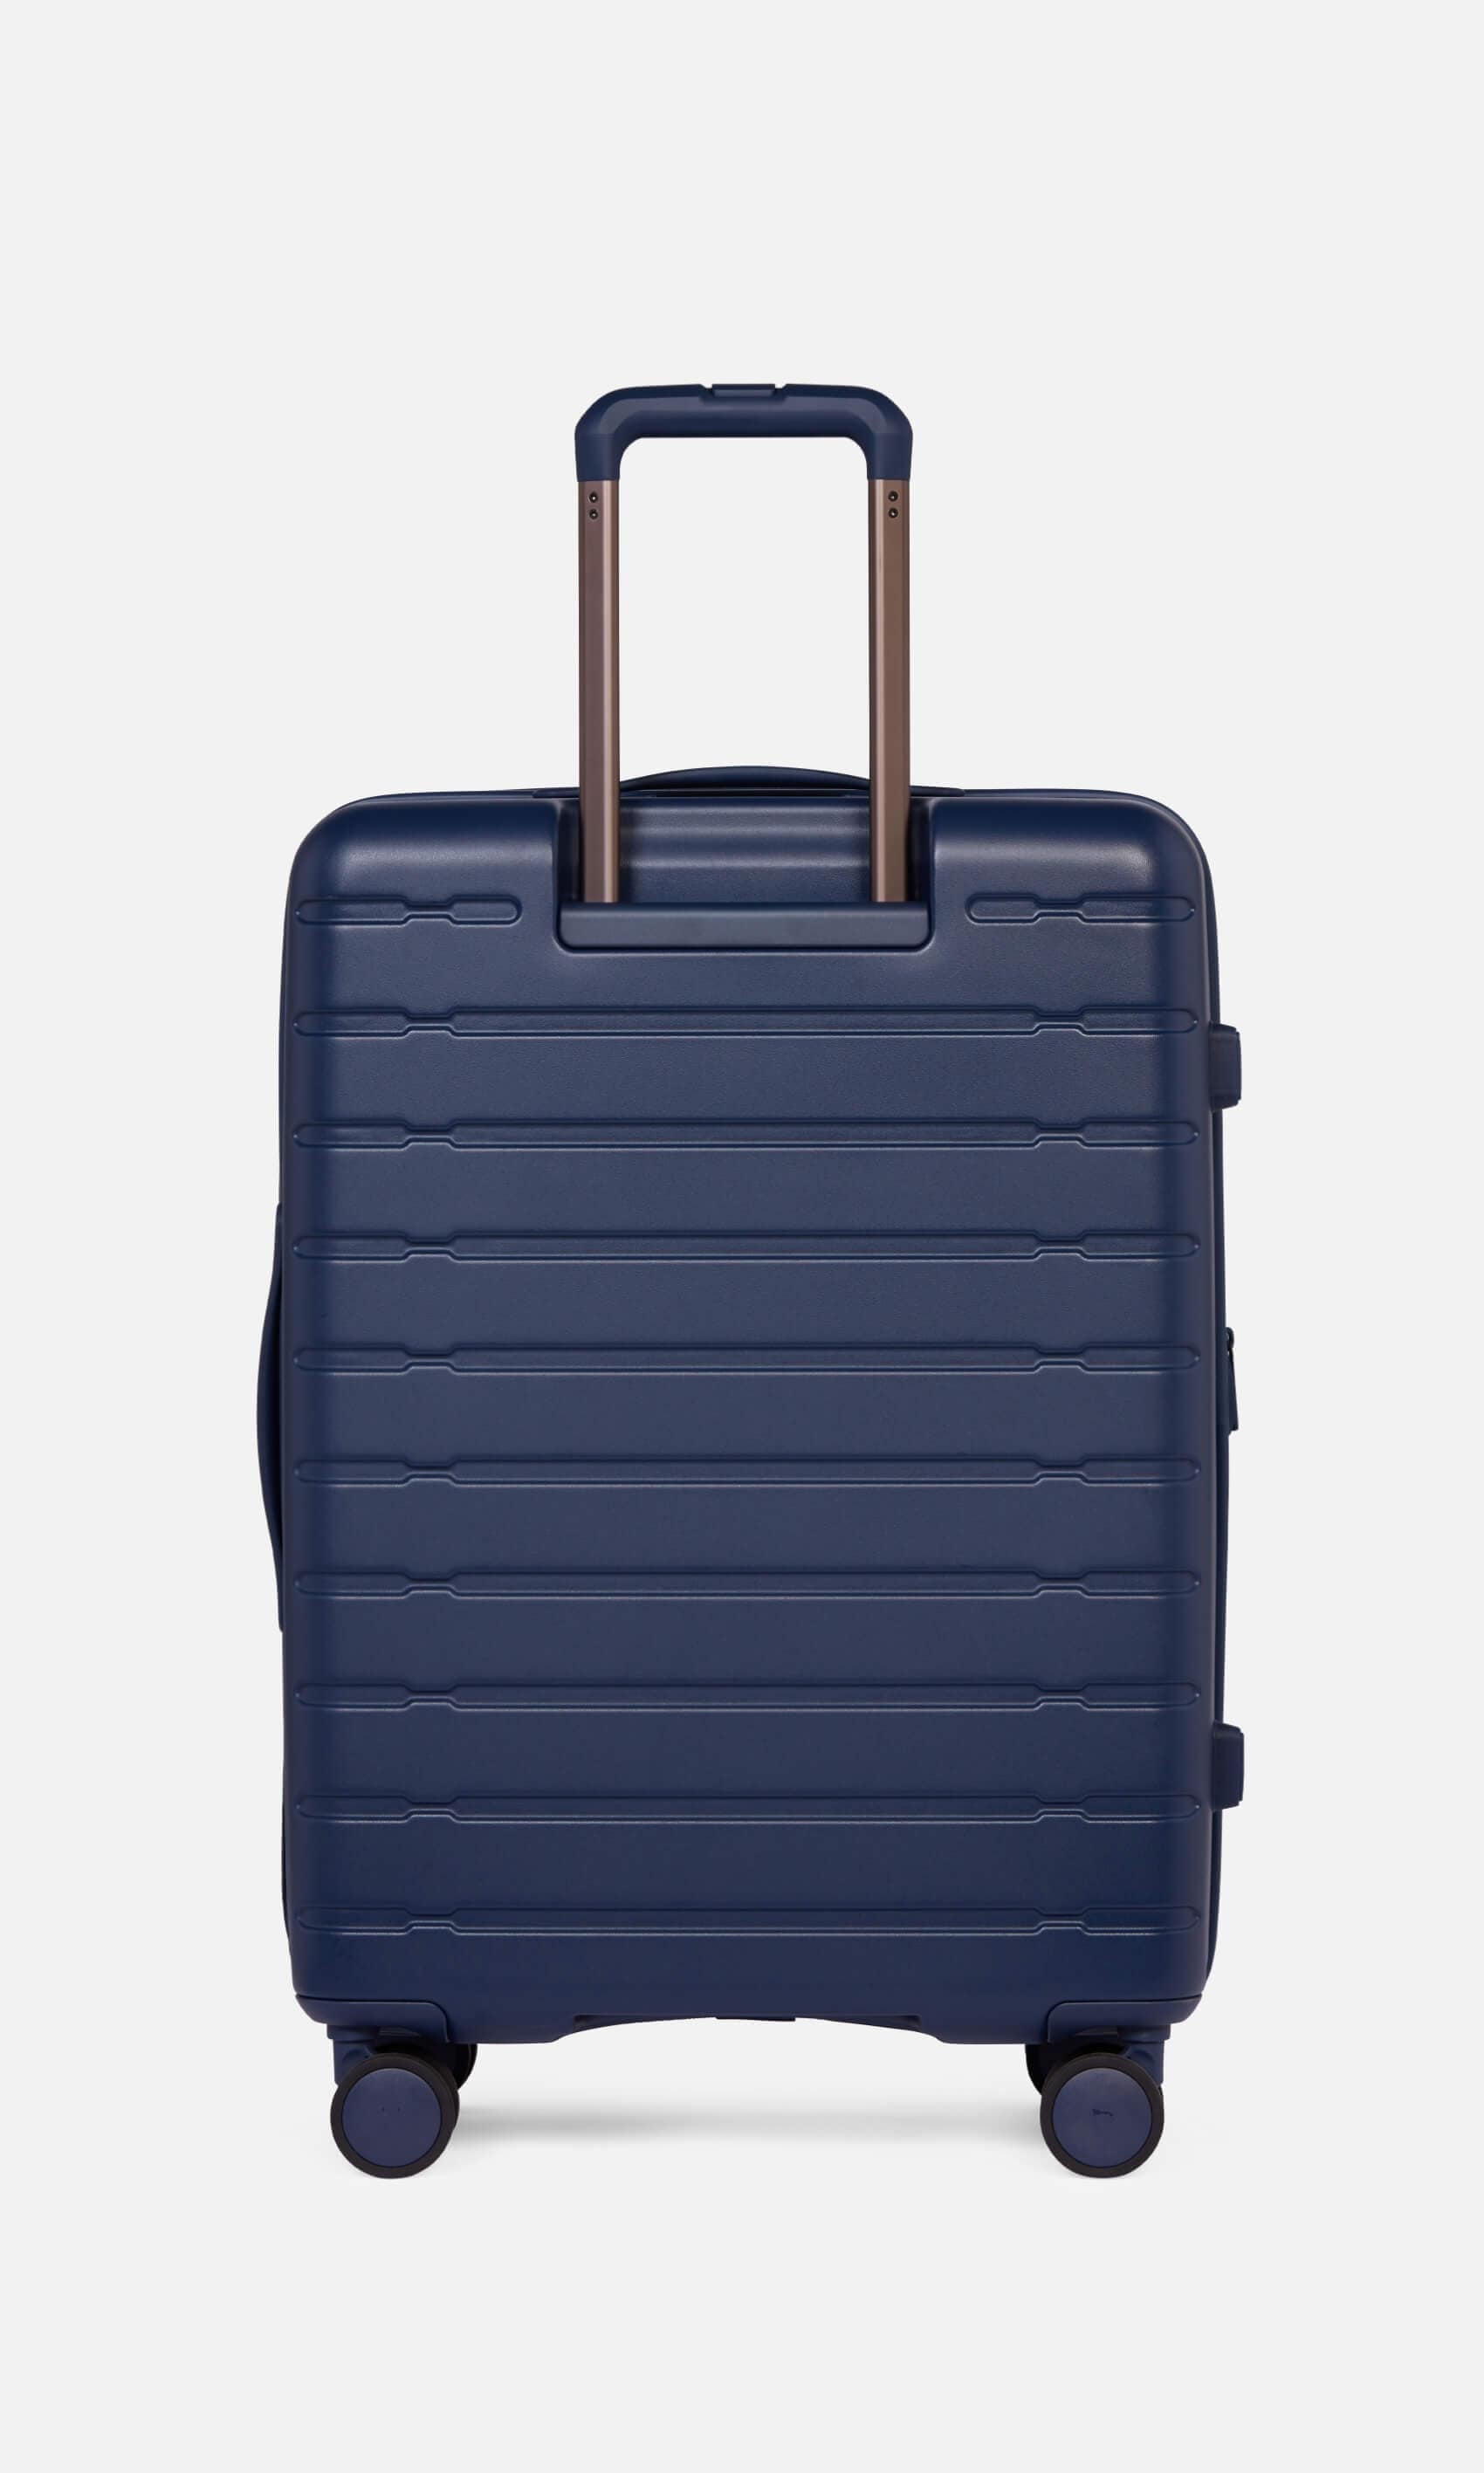 Antler Luggage -  Stamford medium in dusk blue - Hard Suitcases Stamford Medium Suitcase Blue | Hard Luggage | Antler 